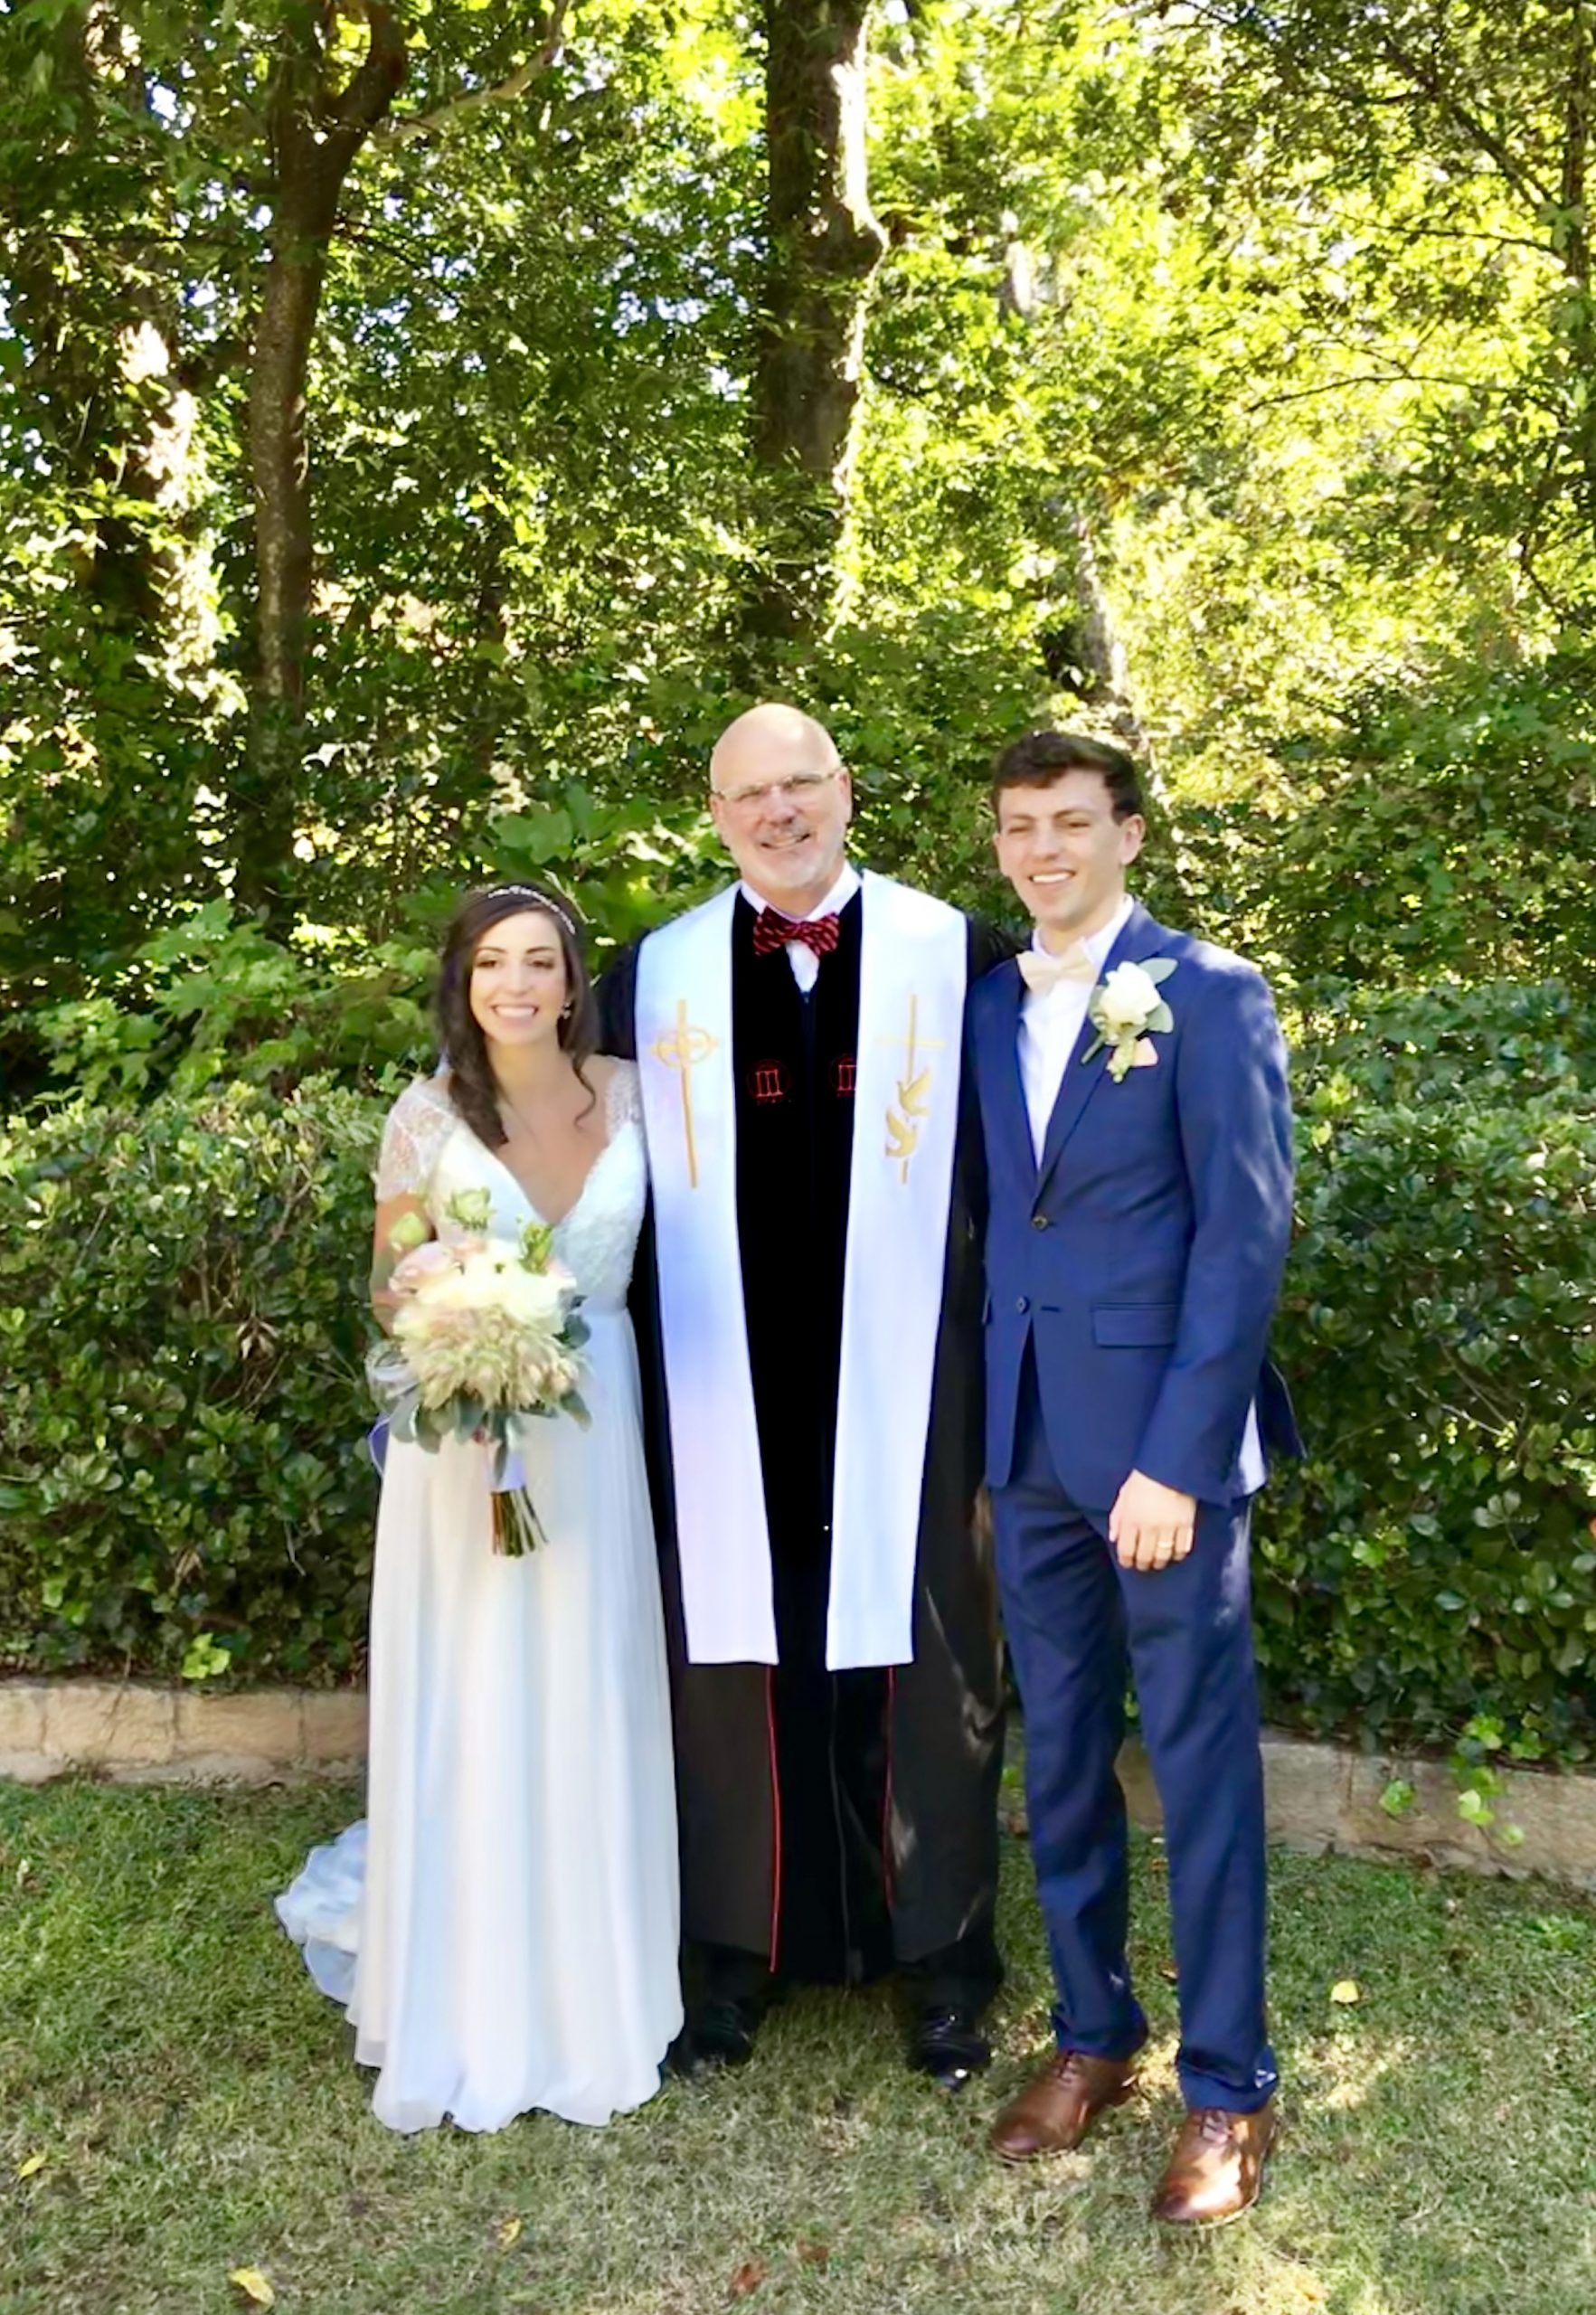 Wedding Officiant / Minister in Atlanta, GA // Fash